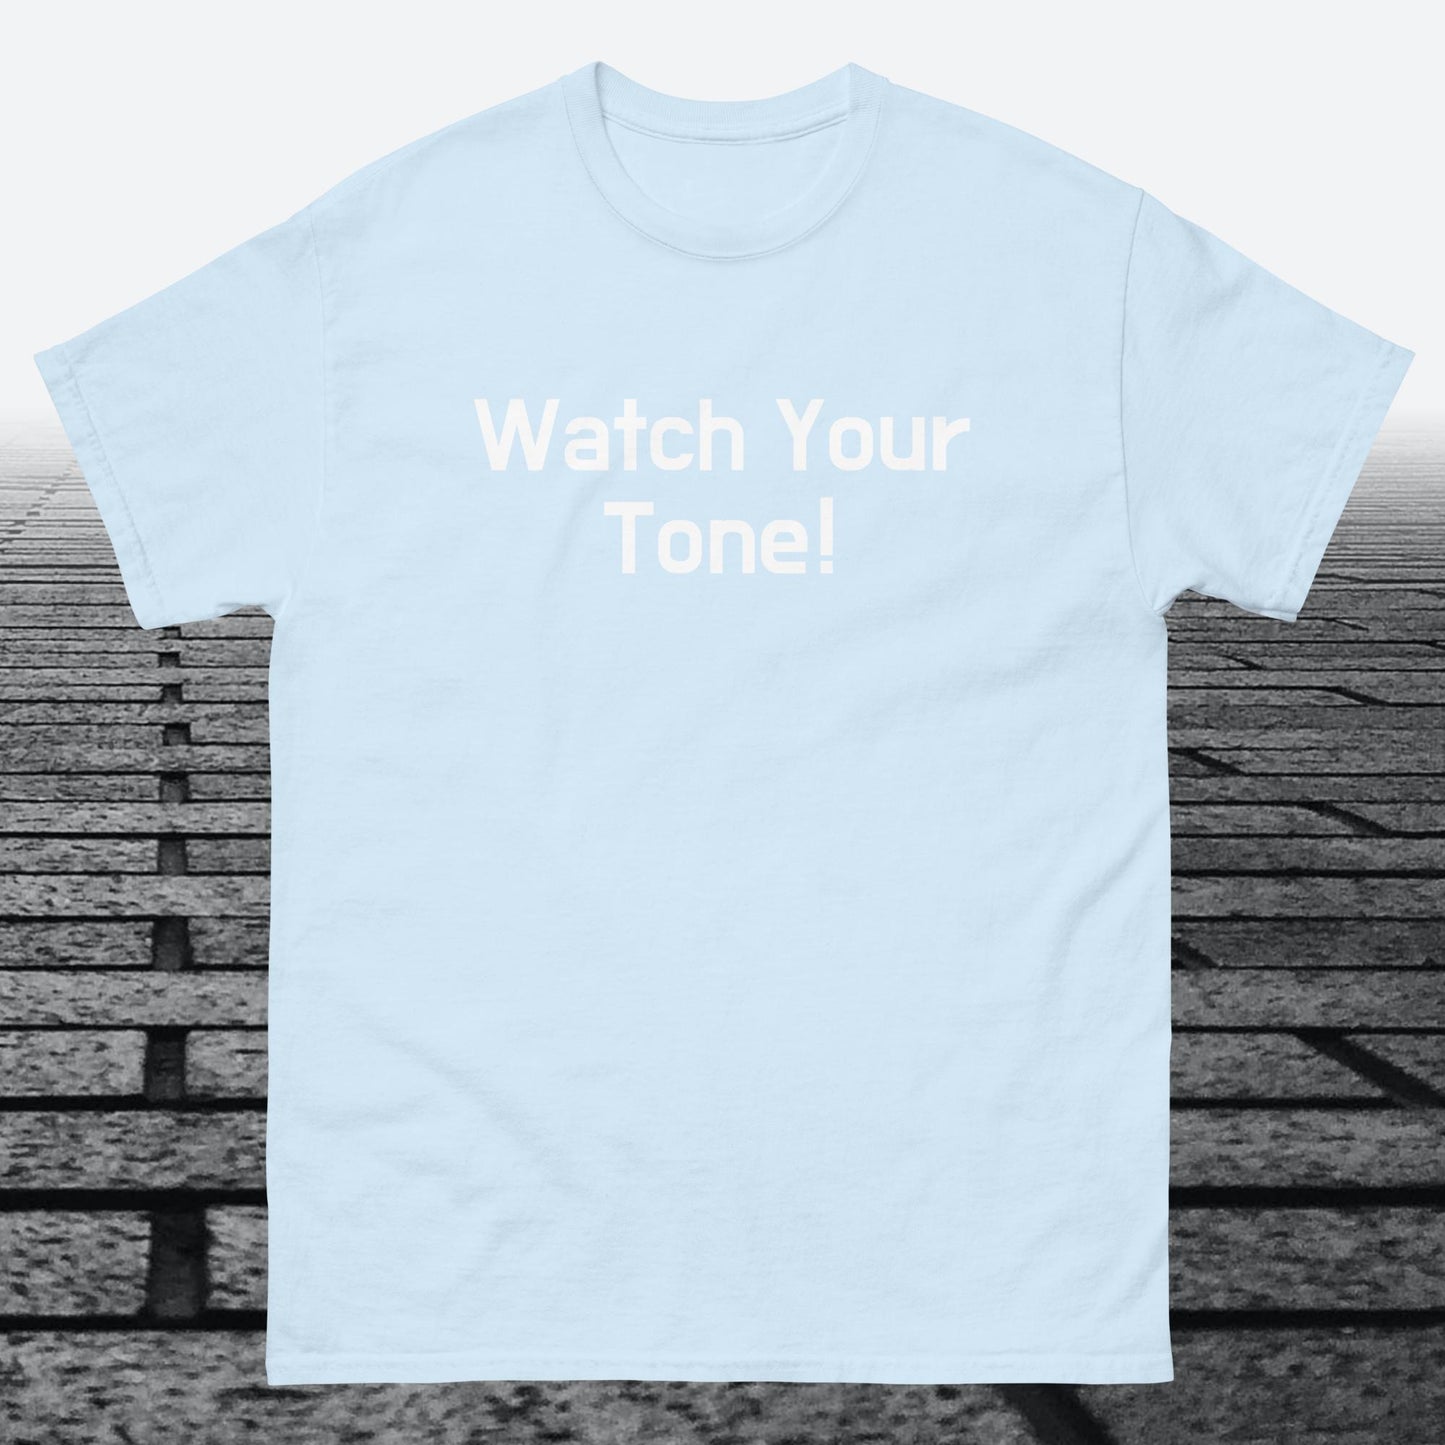 Watch Your Tone, Cotton T-shirt